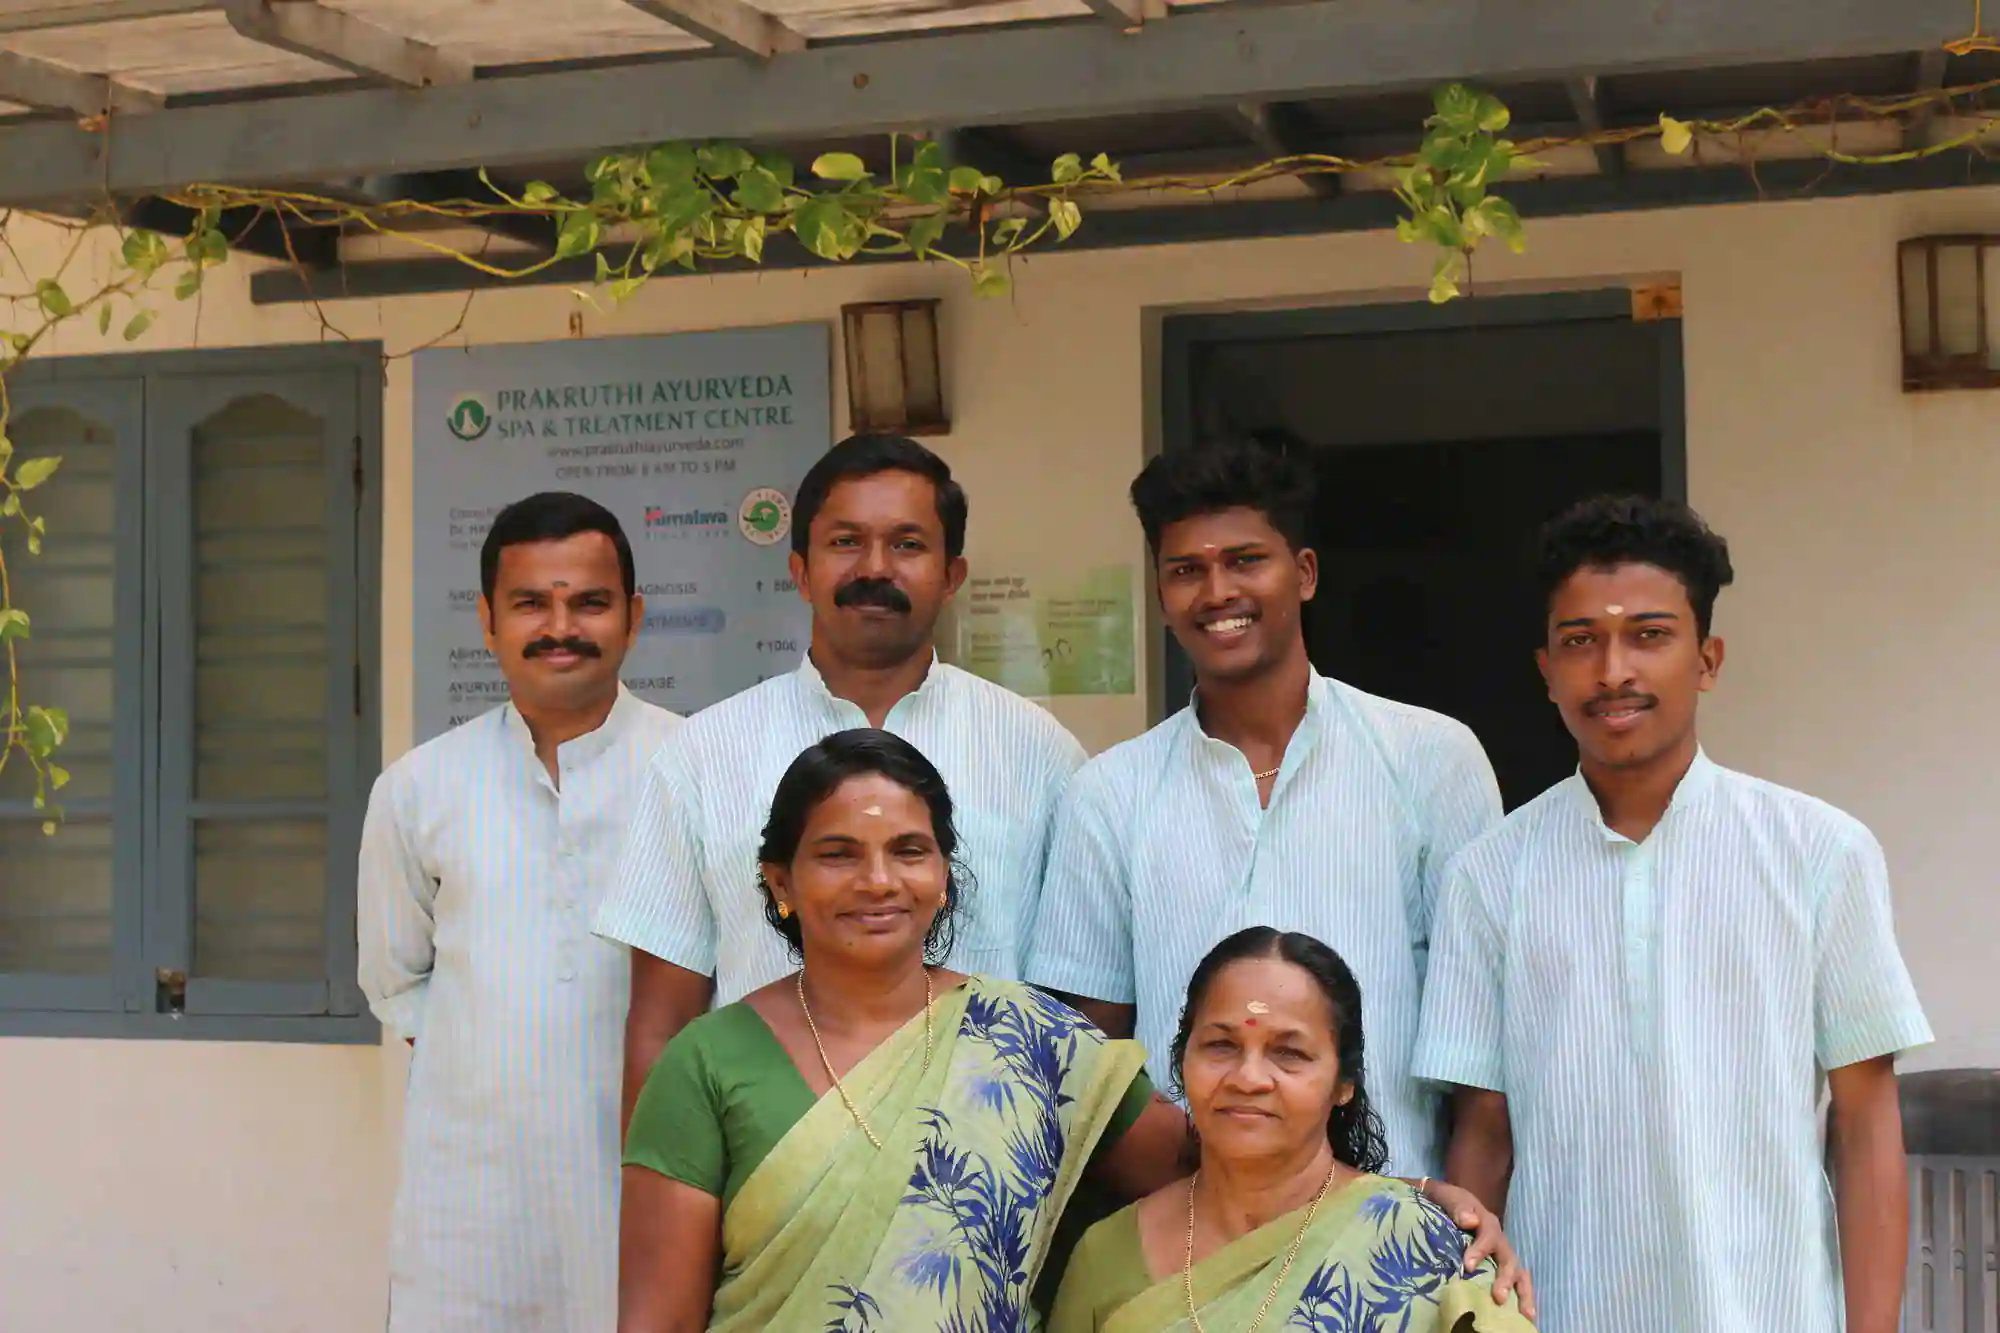 Prakruthi Life – Ayurveda Wellness Centre – Cherai